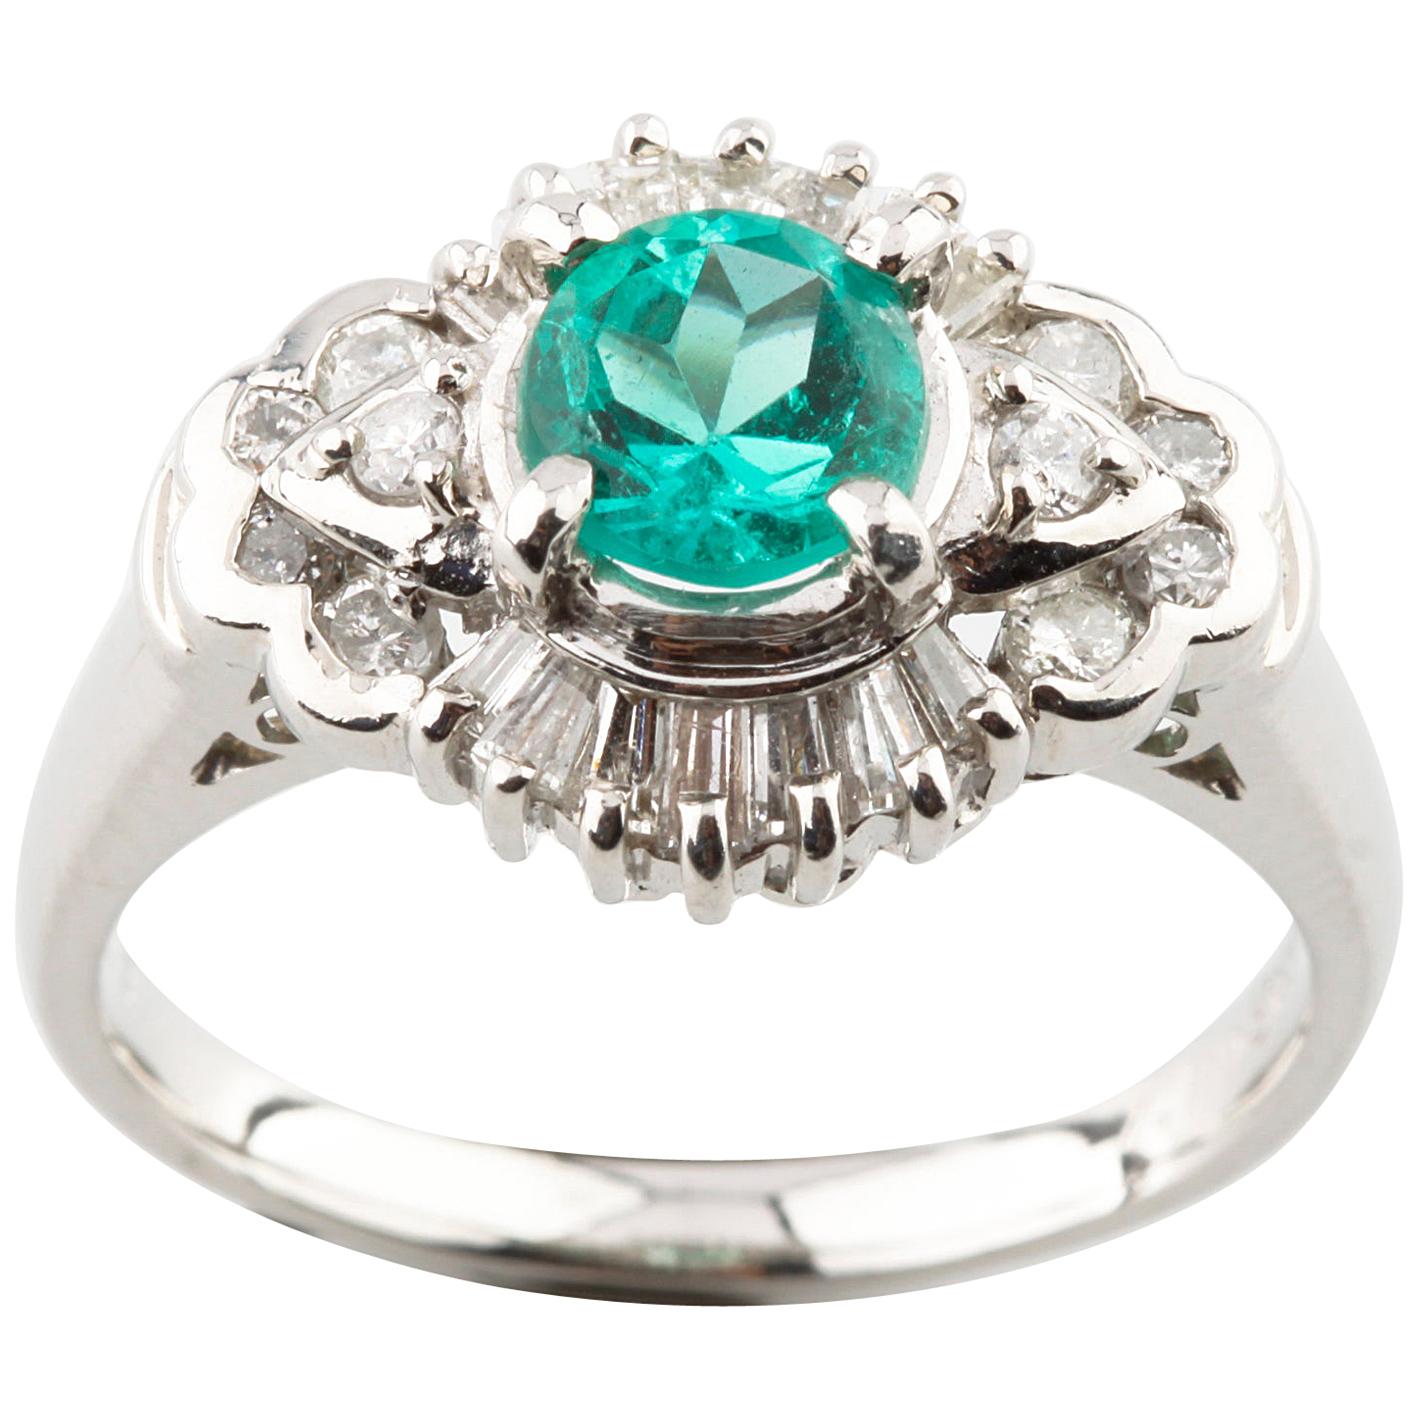 1.65 Carat Emerald Solitaire Platinum Ring with Diamond Accents